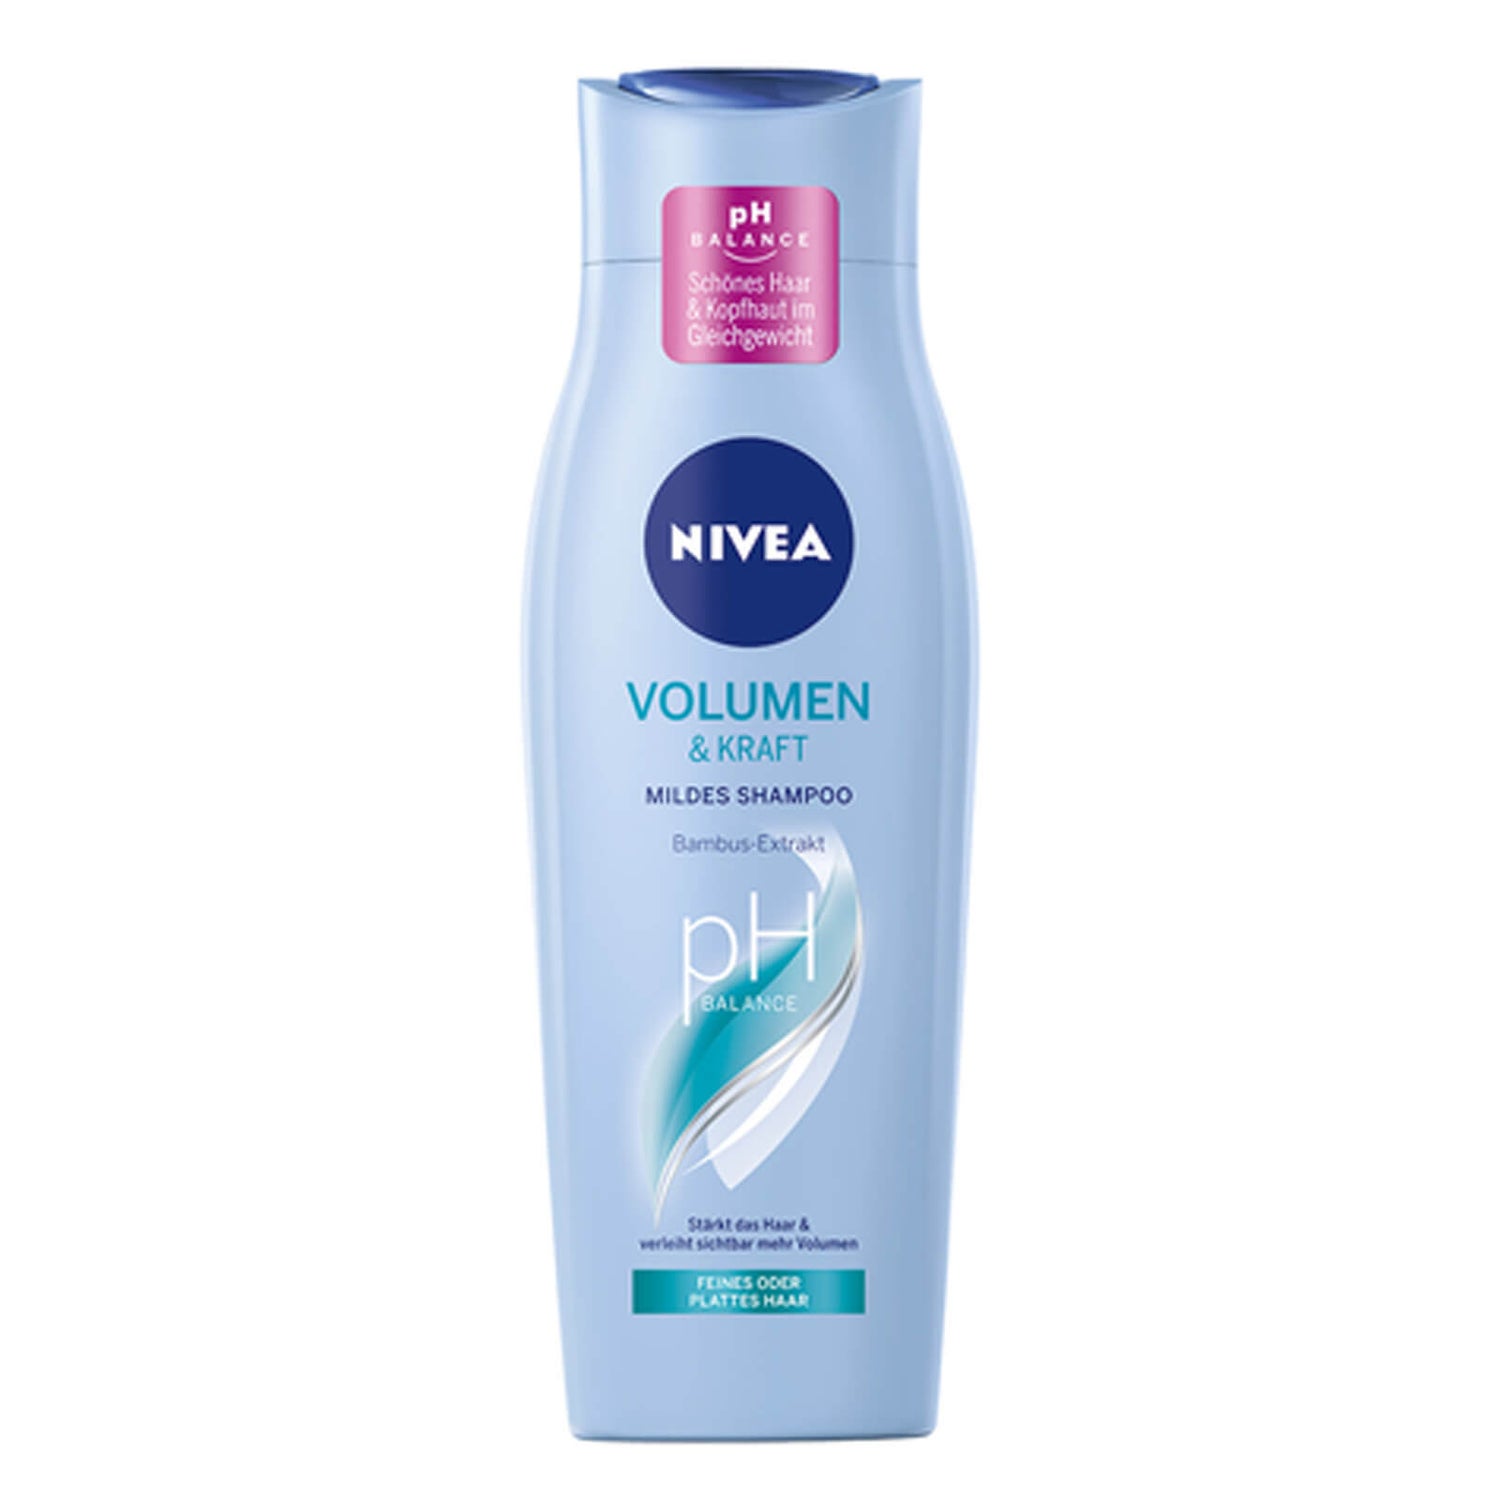 NIVEA Care Mildes Shampoo Volumen & Kraft | GLOSSYBOX US